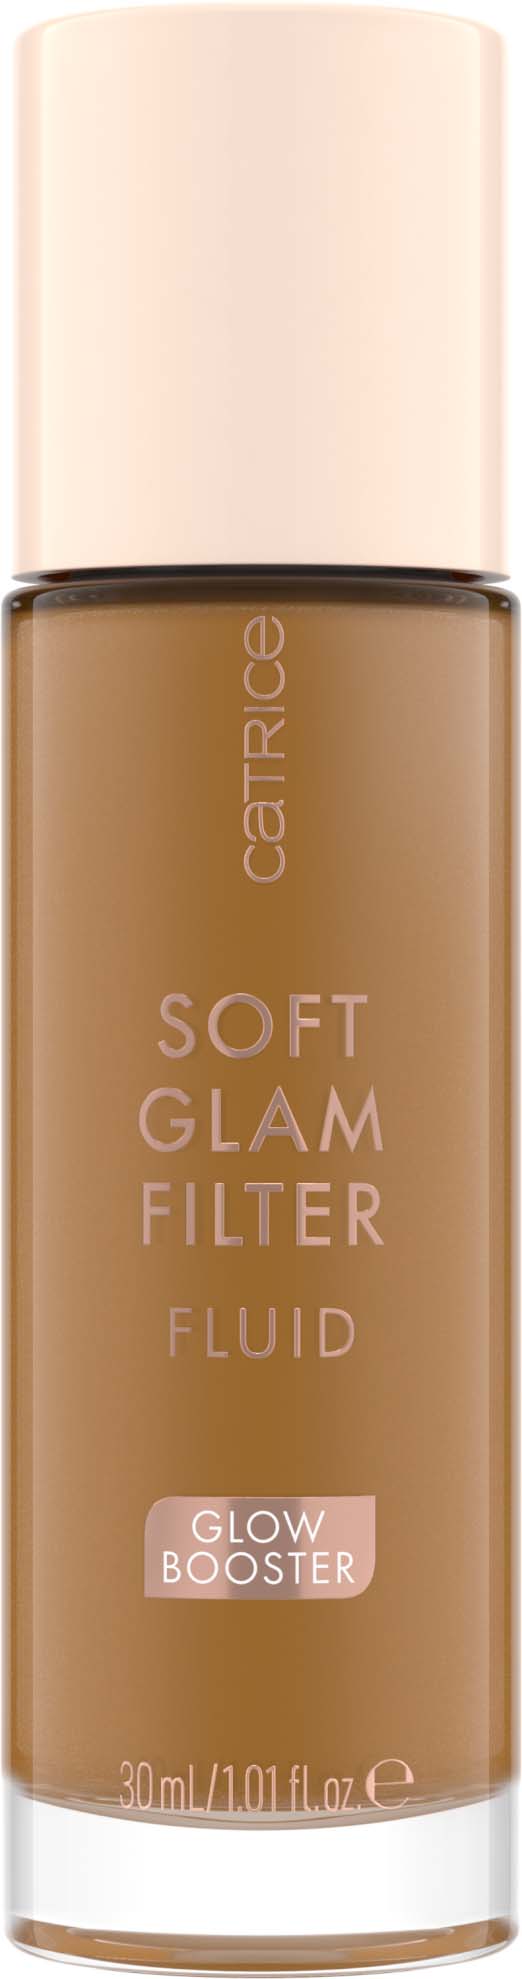 Glam Filter Catrice Soft Tan-Deep 080 Fluid